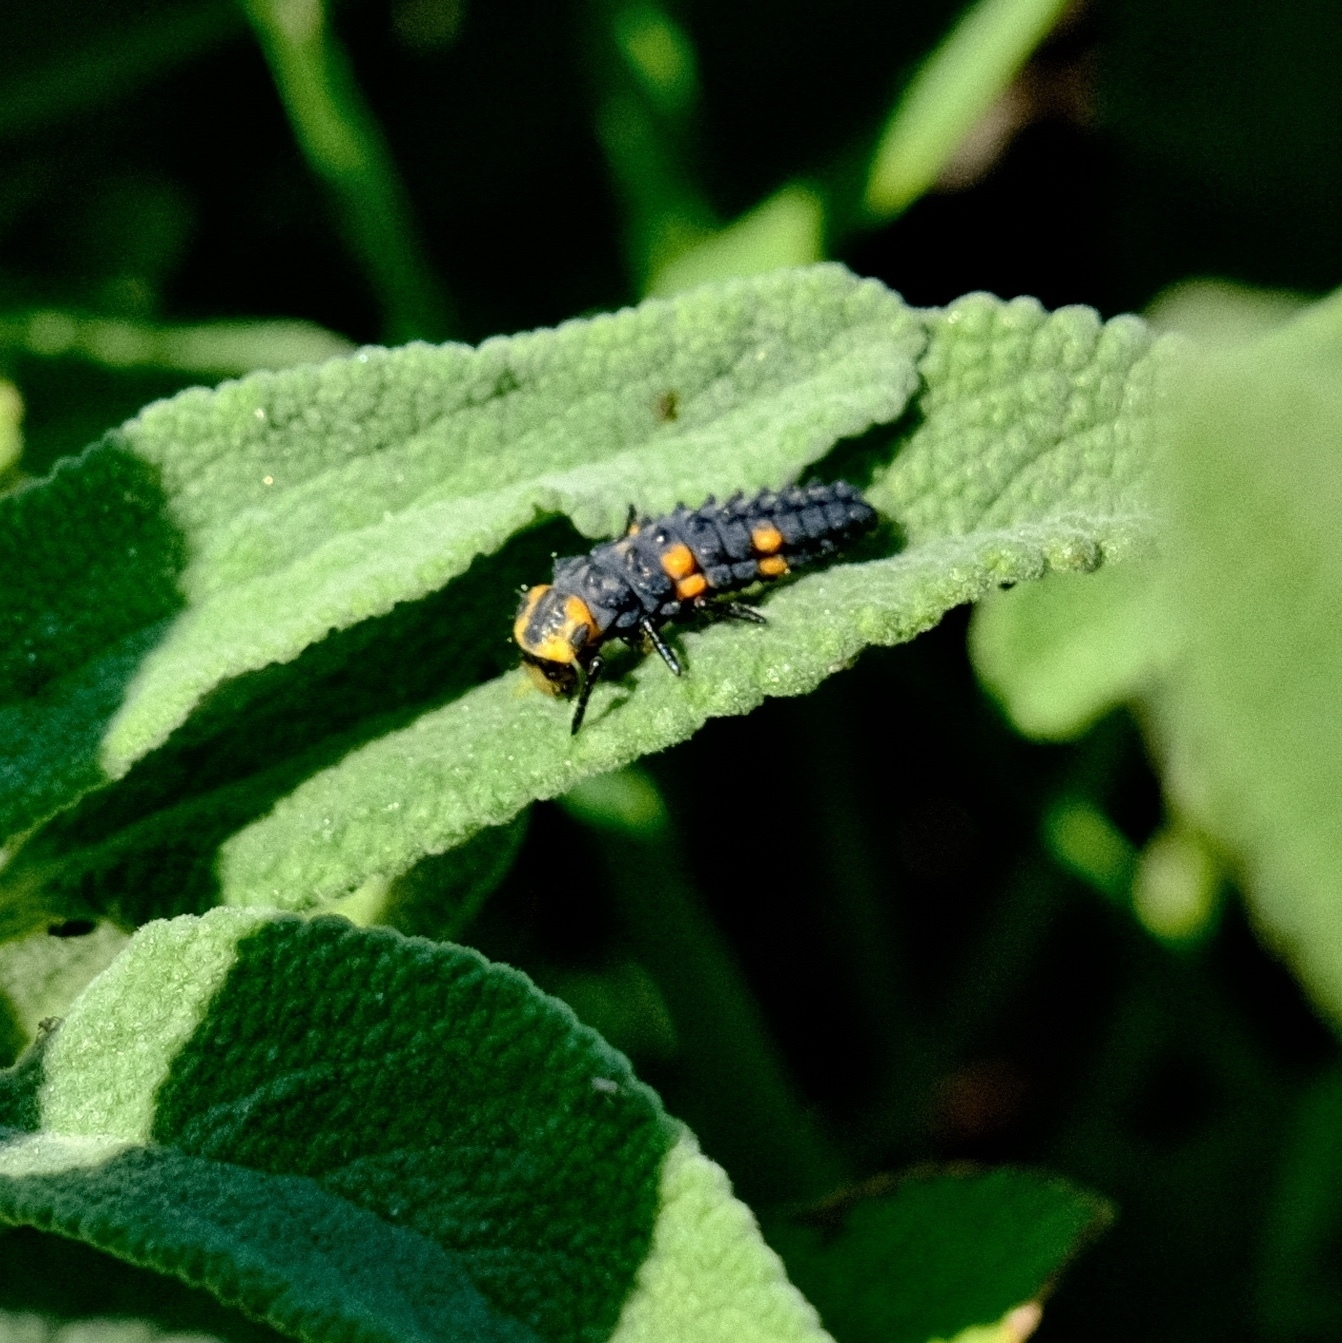 side view of black with orange spots ladybug larva on safe lead.